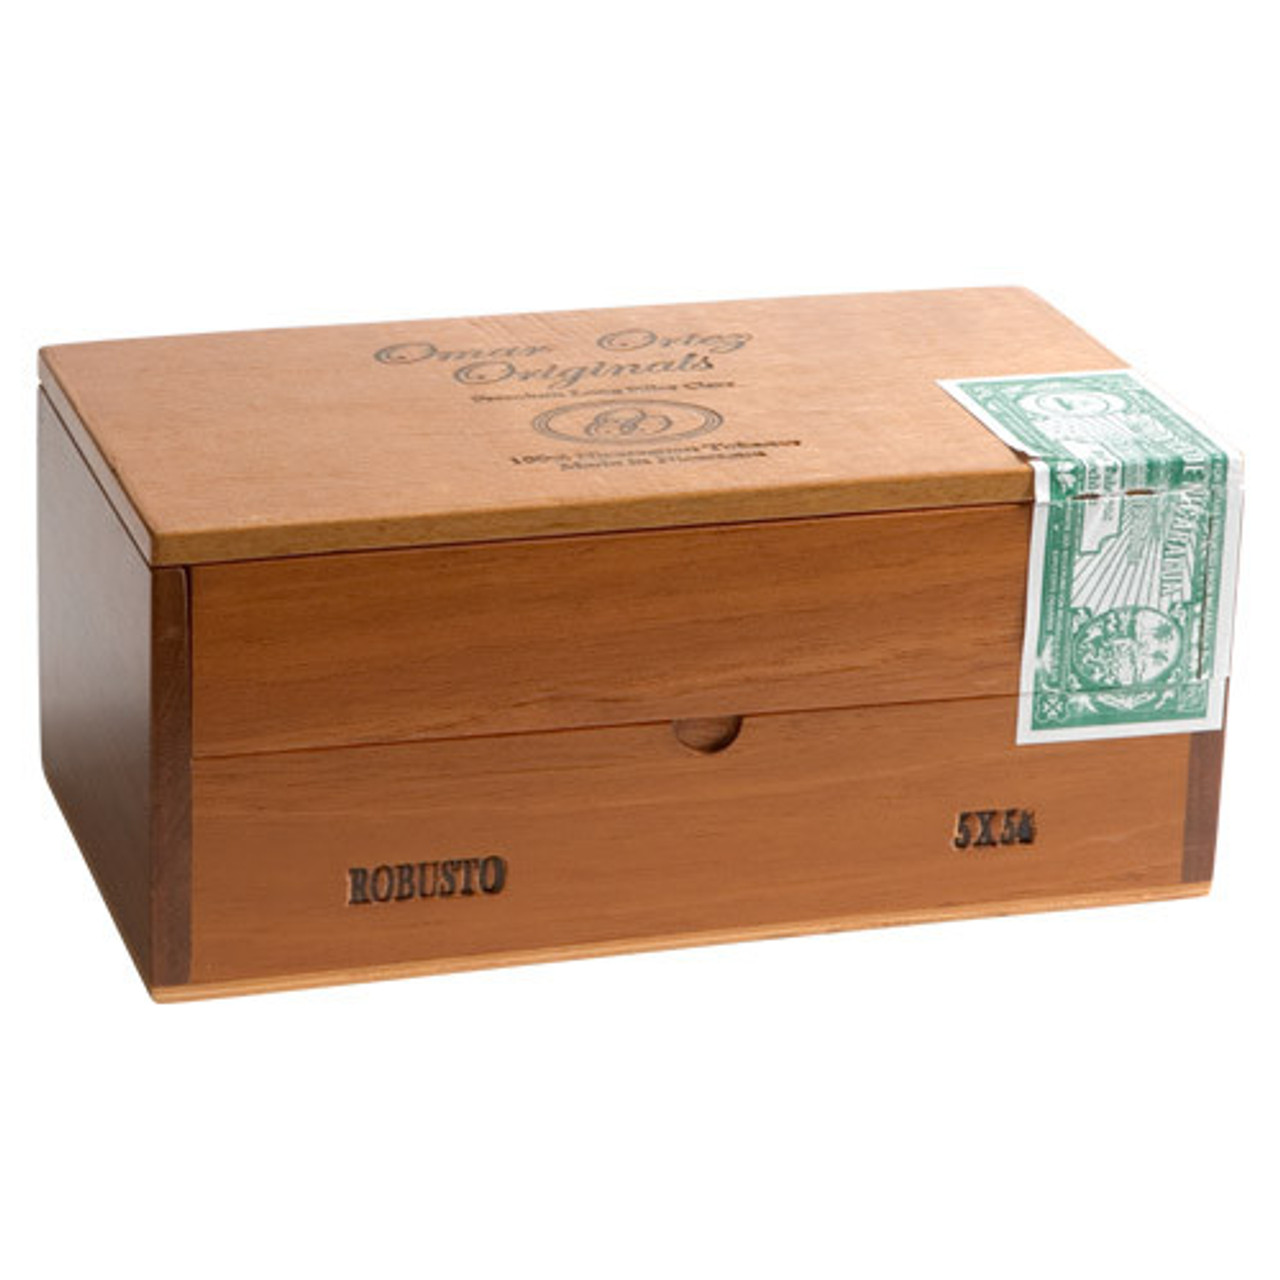 Omar Ortez Originals Robusto Cigars - 5 x 54 (Box of 60) *Box